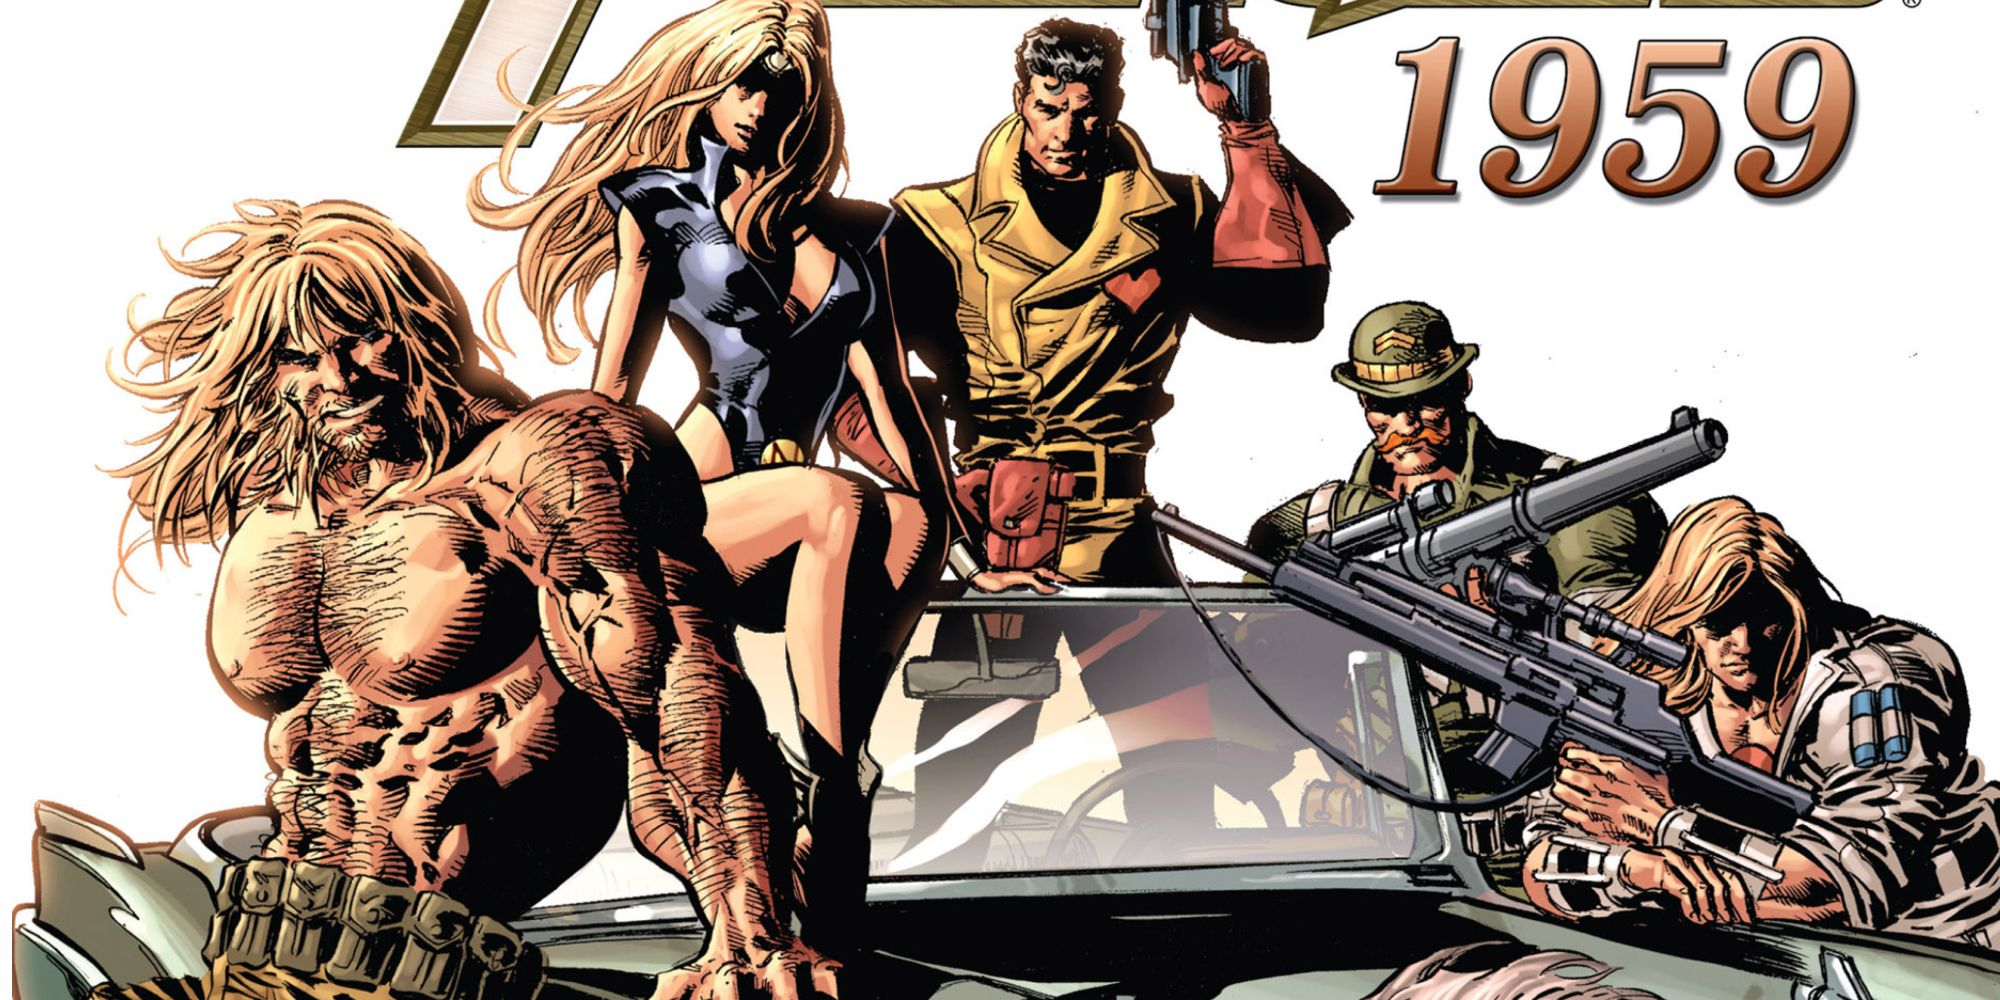 Bloodstone joins the Avengers in Marvel Comics.